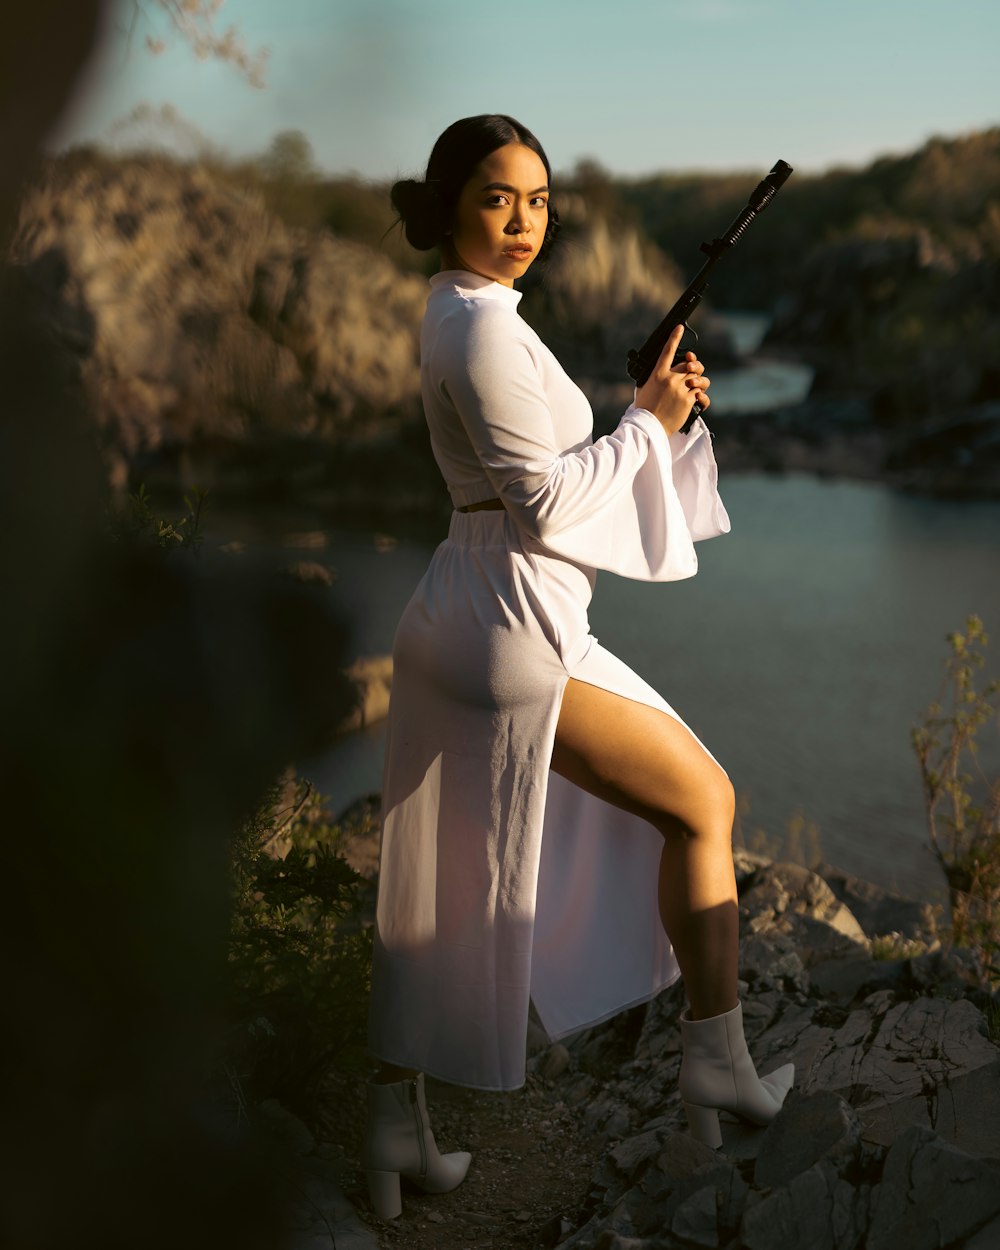 a woman in a white dress holding a gun